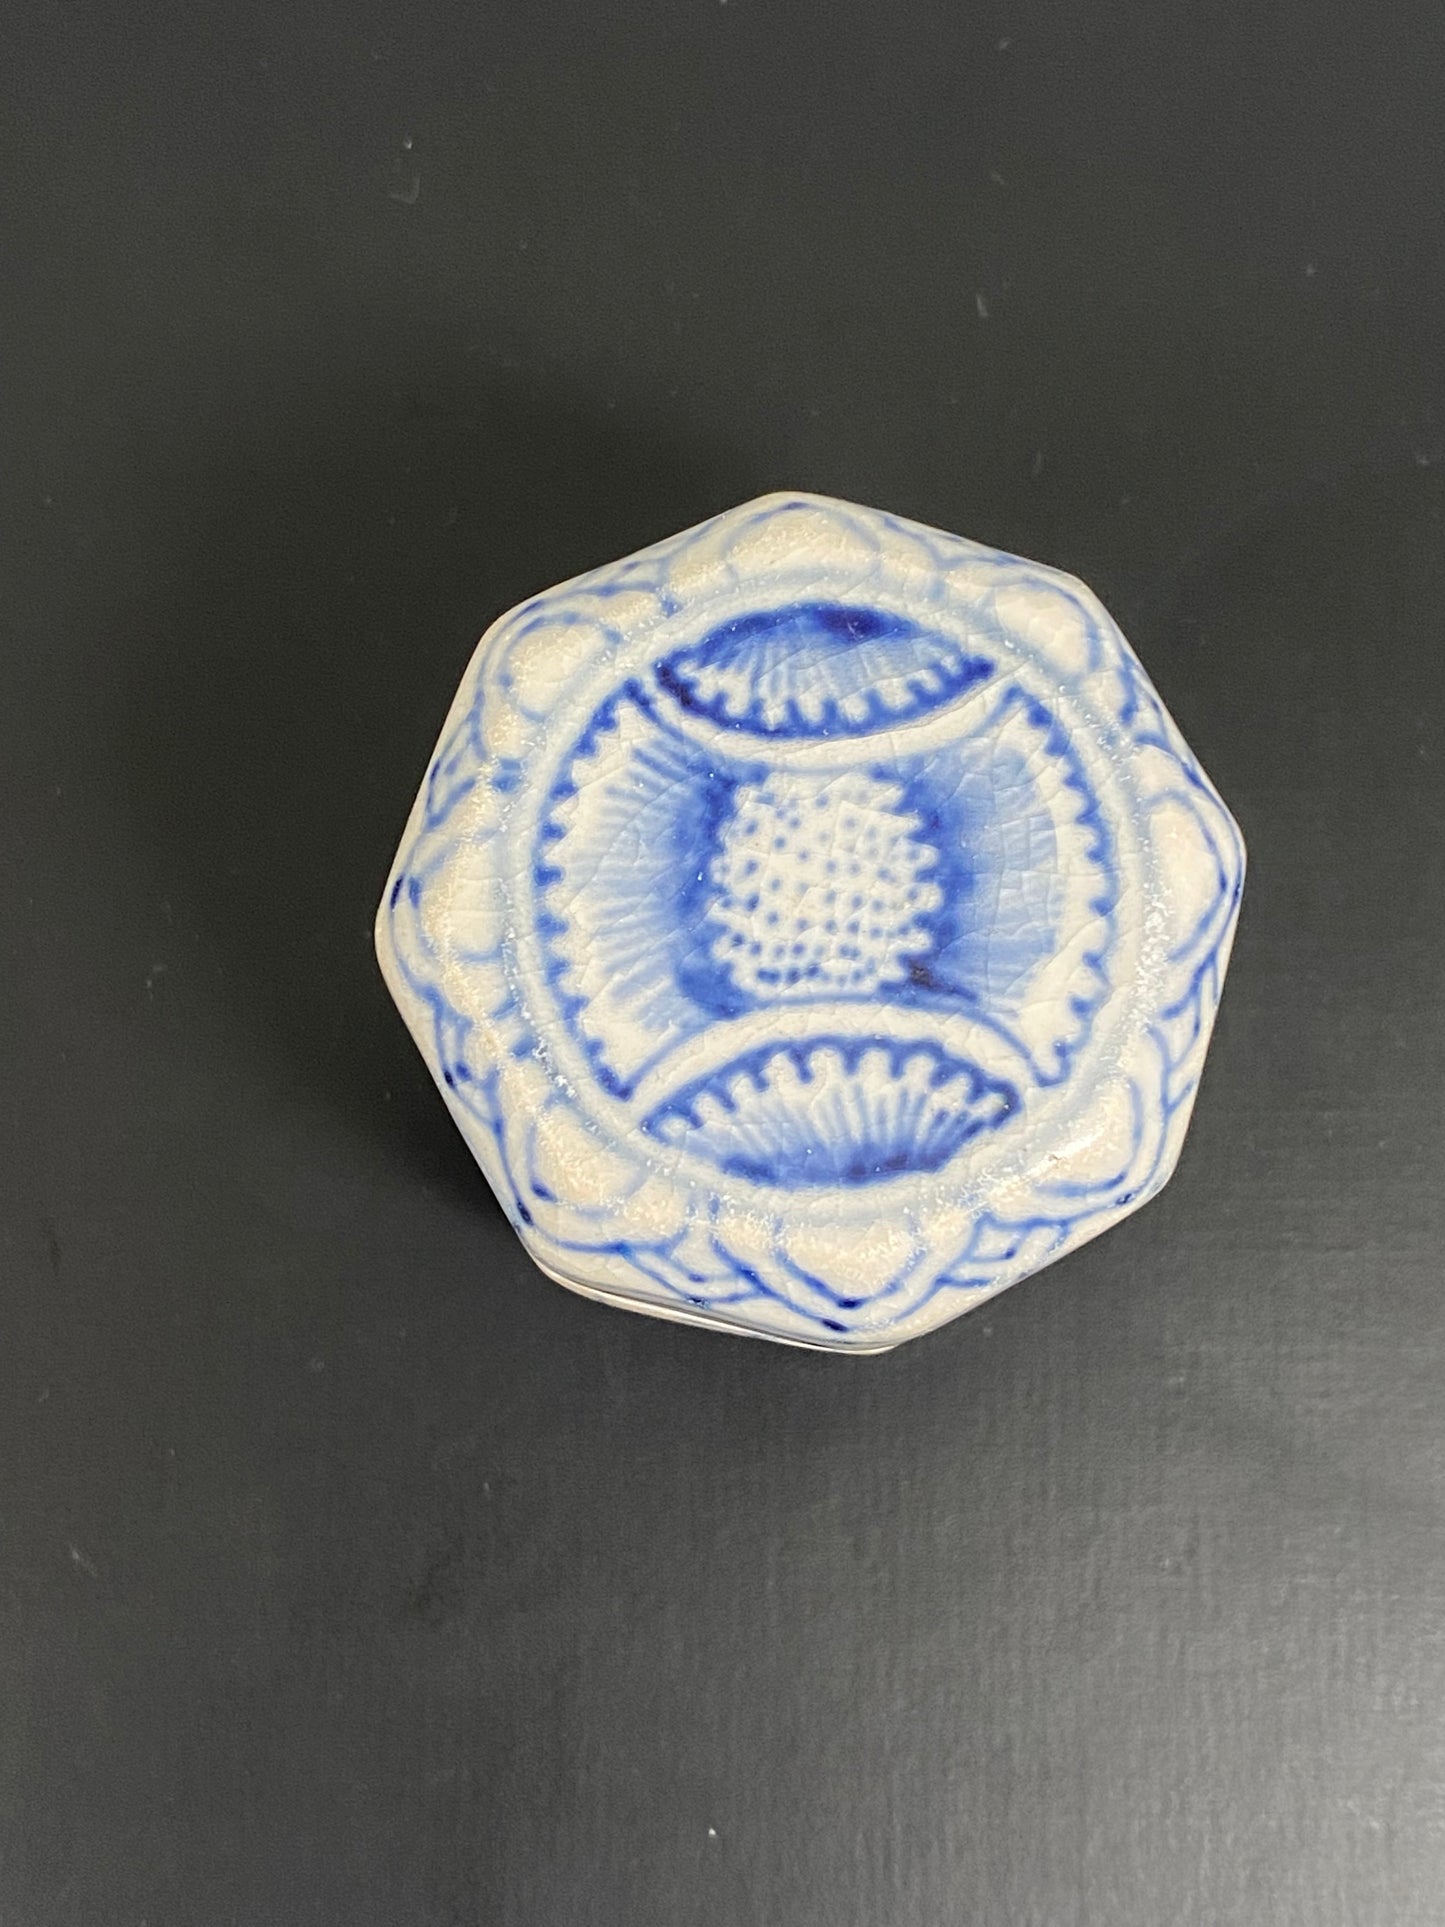 Shipwreck Porcelain Annamese Style Lidded Trinket Box from Hoi An Hoard, 15th century Vietnam